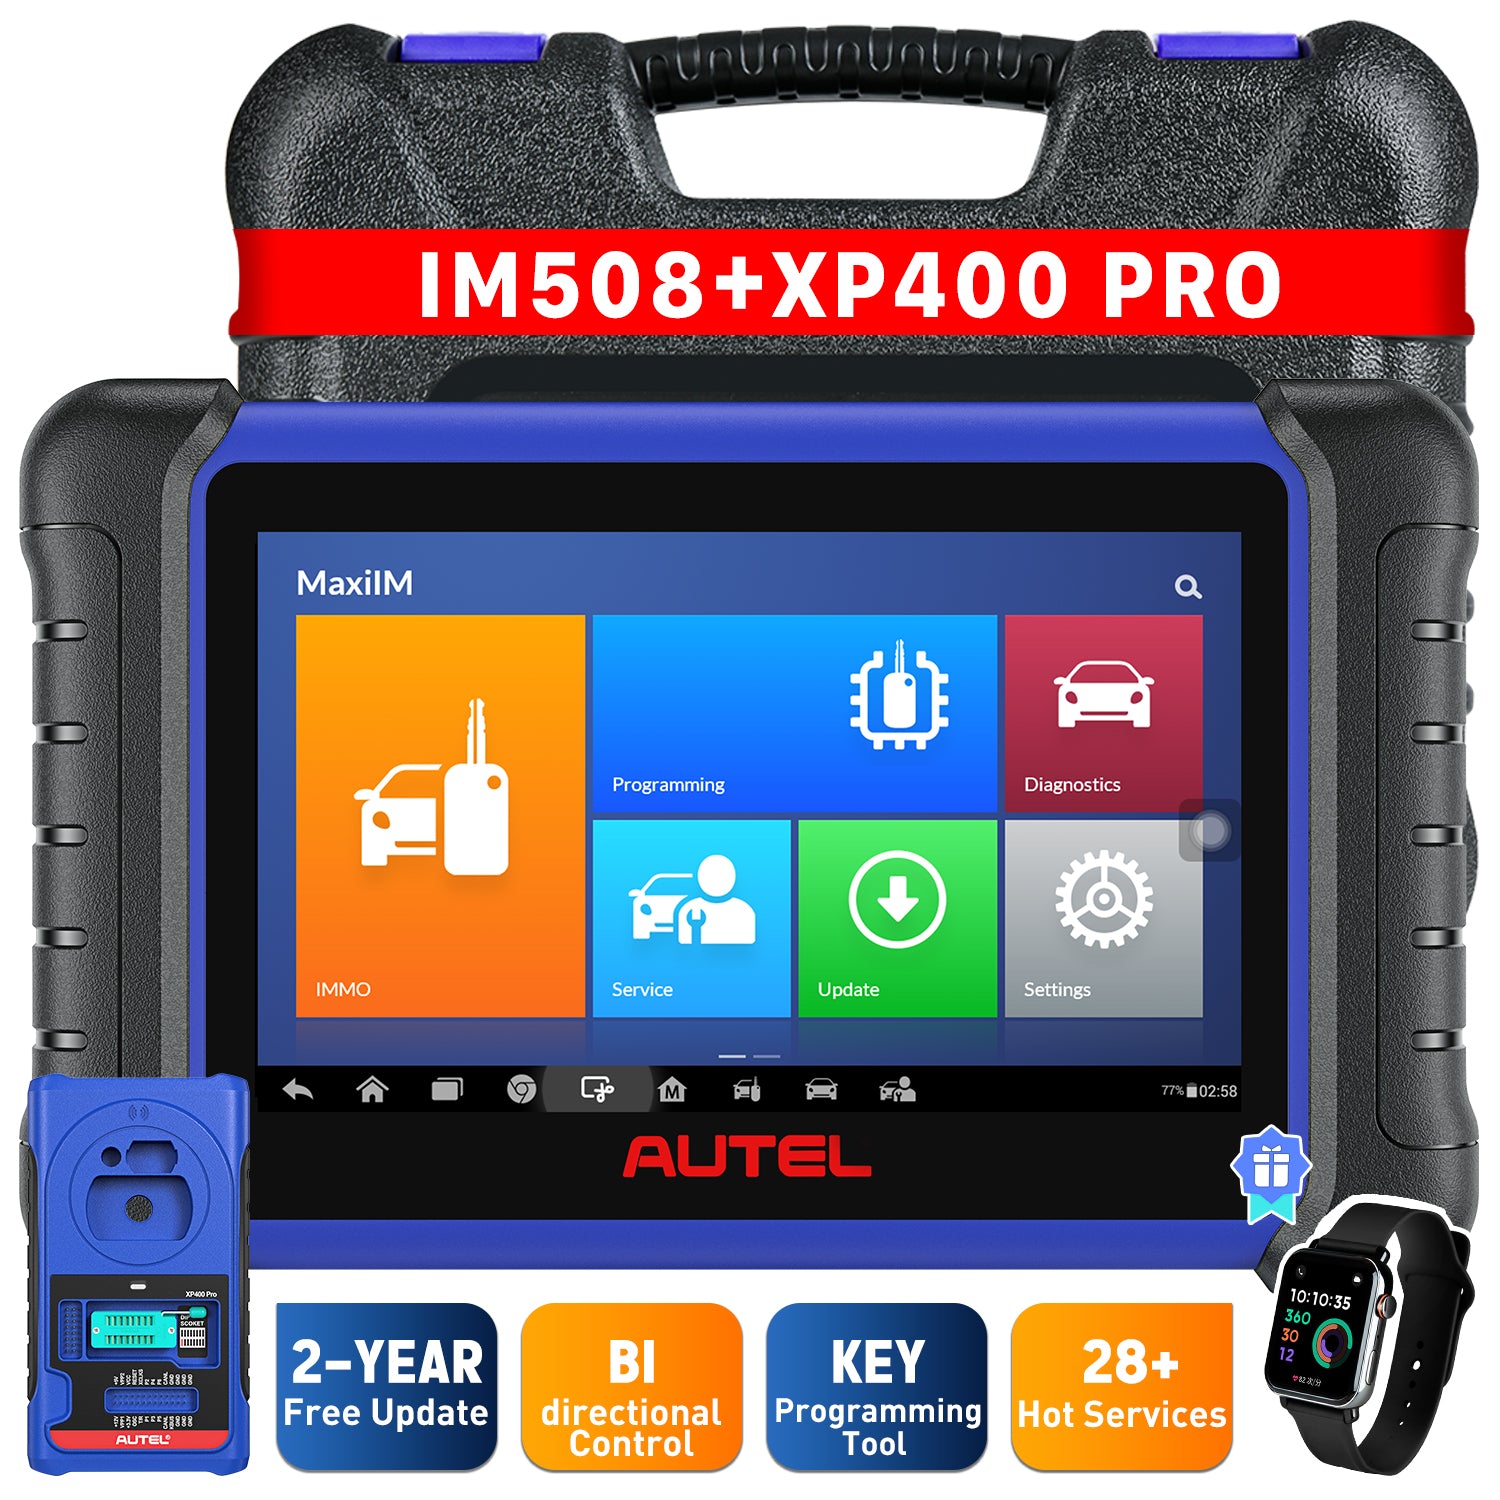 Autel MaxiIM IM508 and XP400 Pro